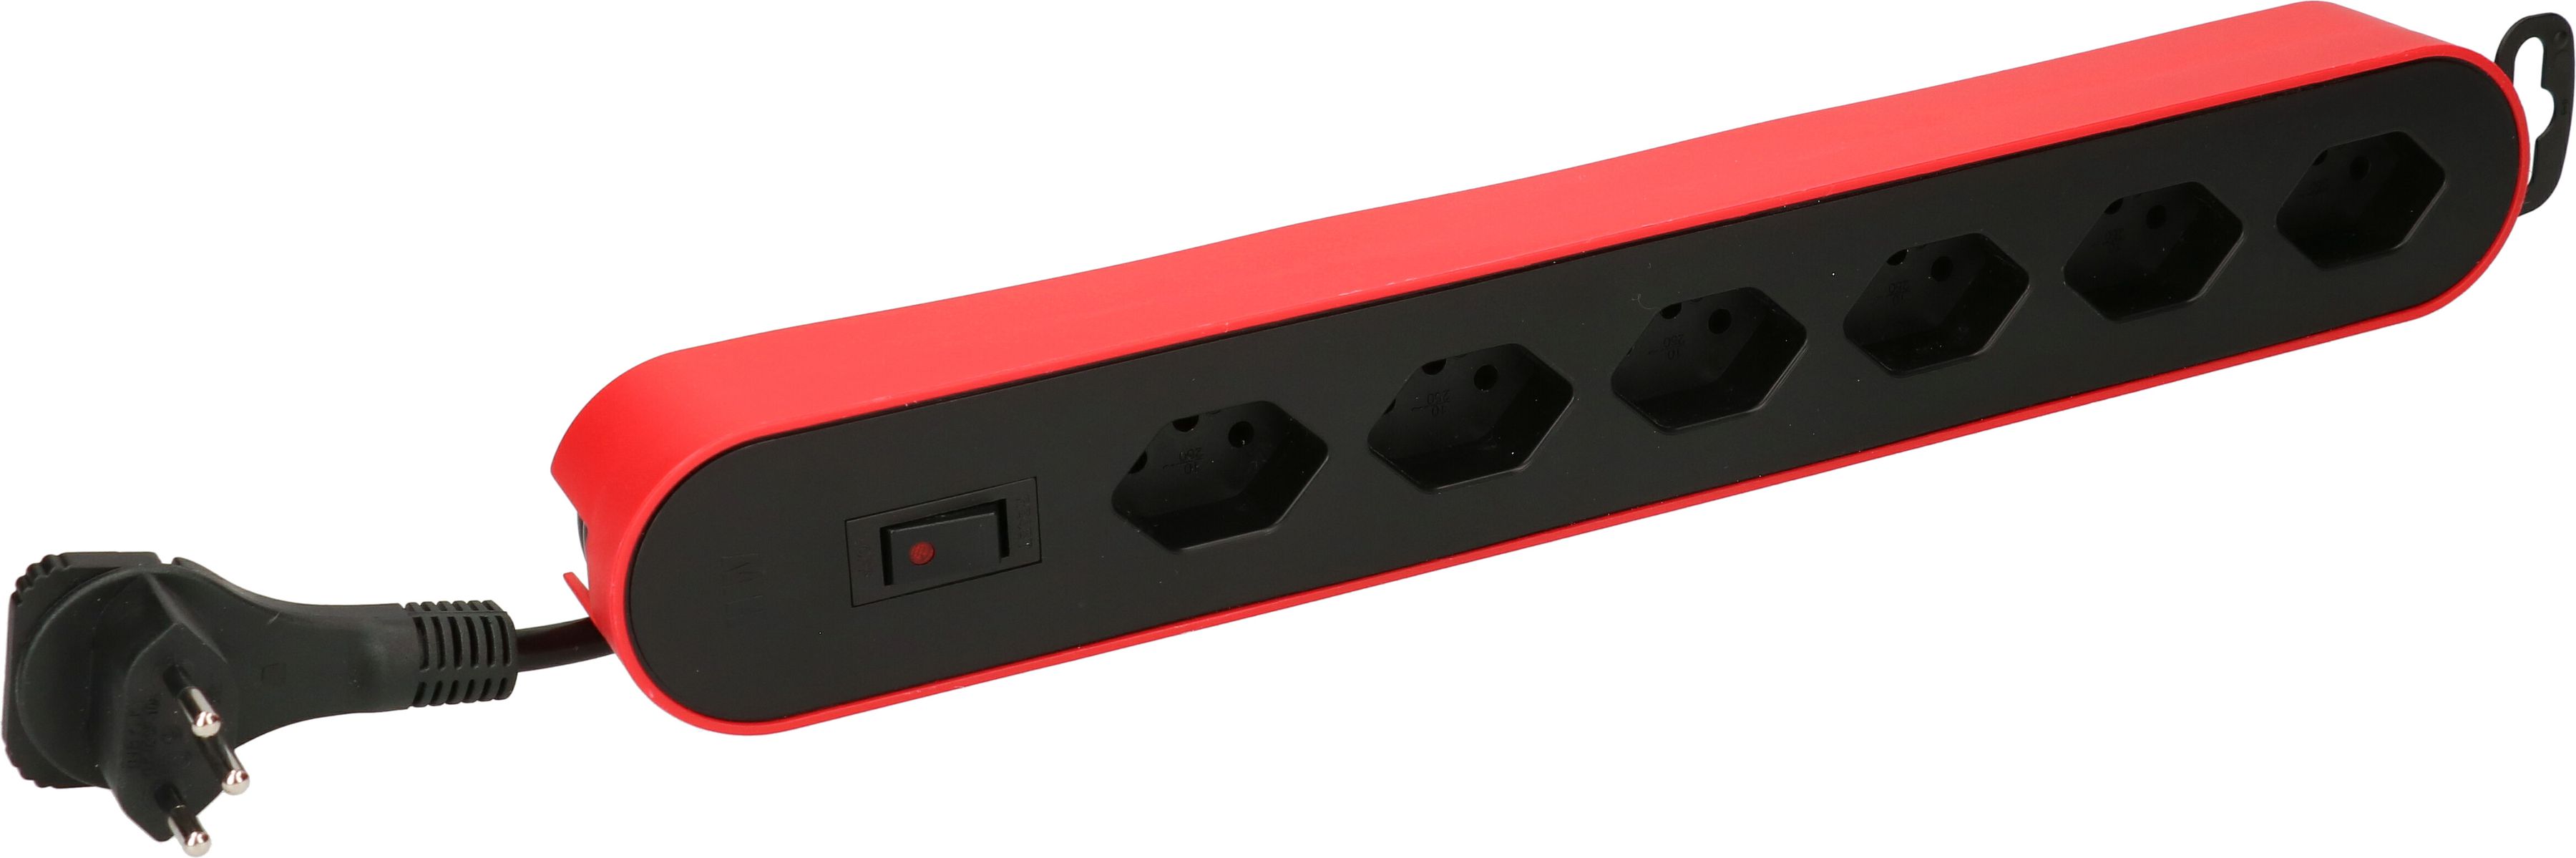 Multiple socket Design Line 6x type 13 red/black